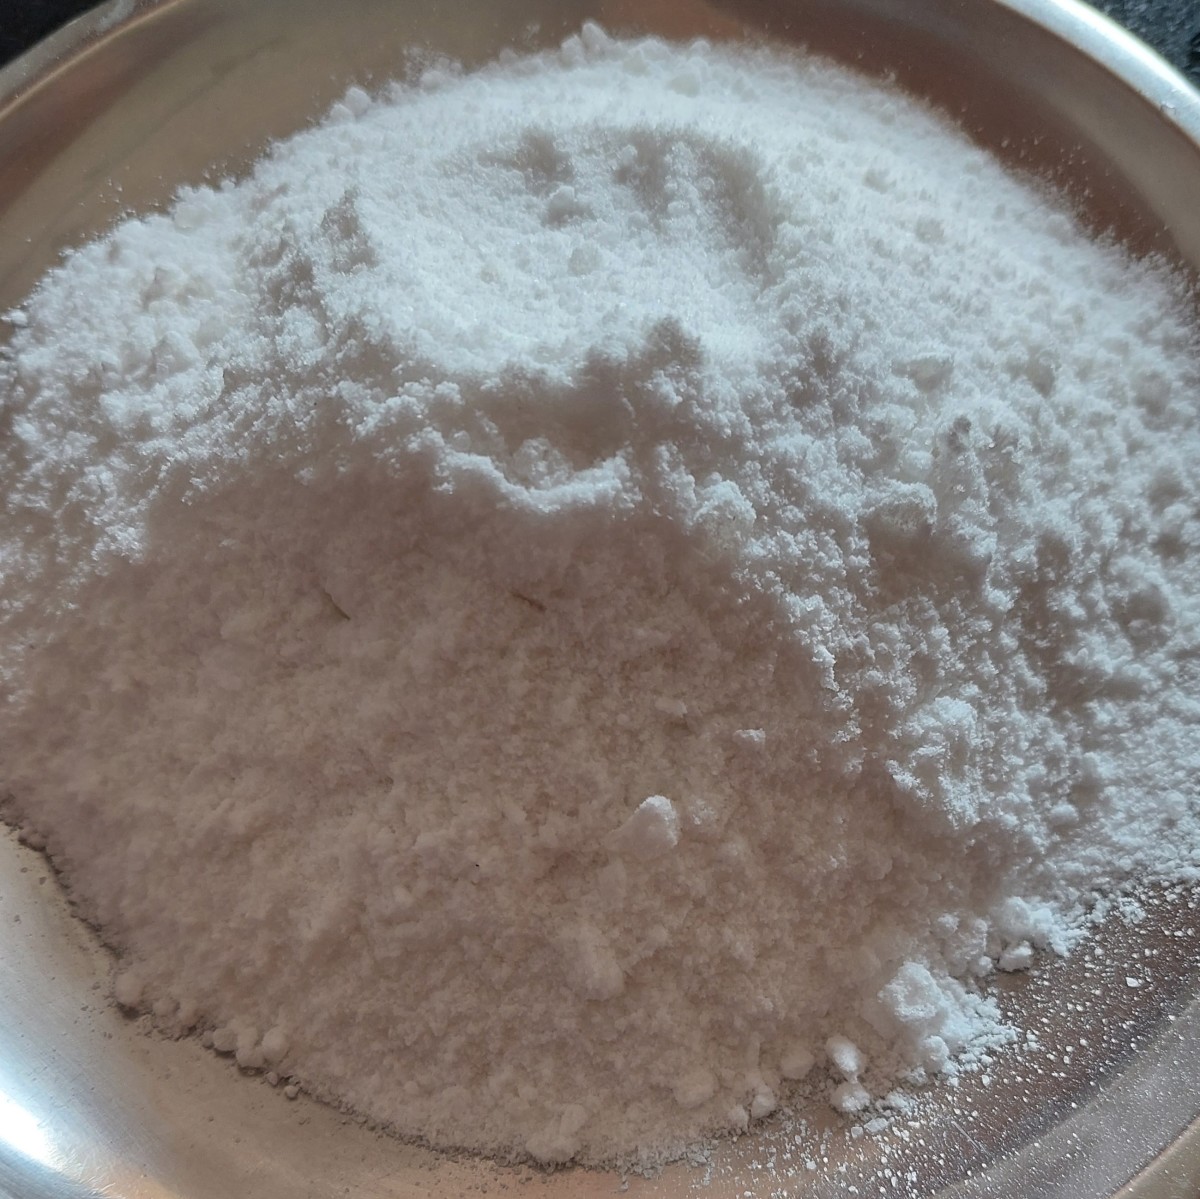 Grind 1 cup of sugar to powder (or use 3/4 cup powder sugar). Set aside.